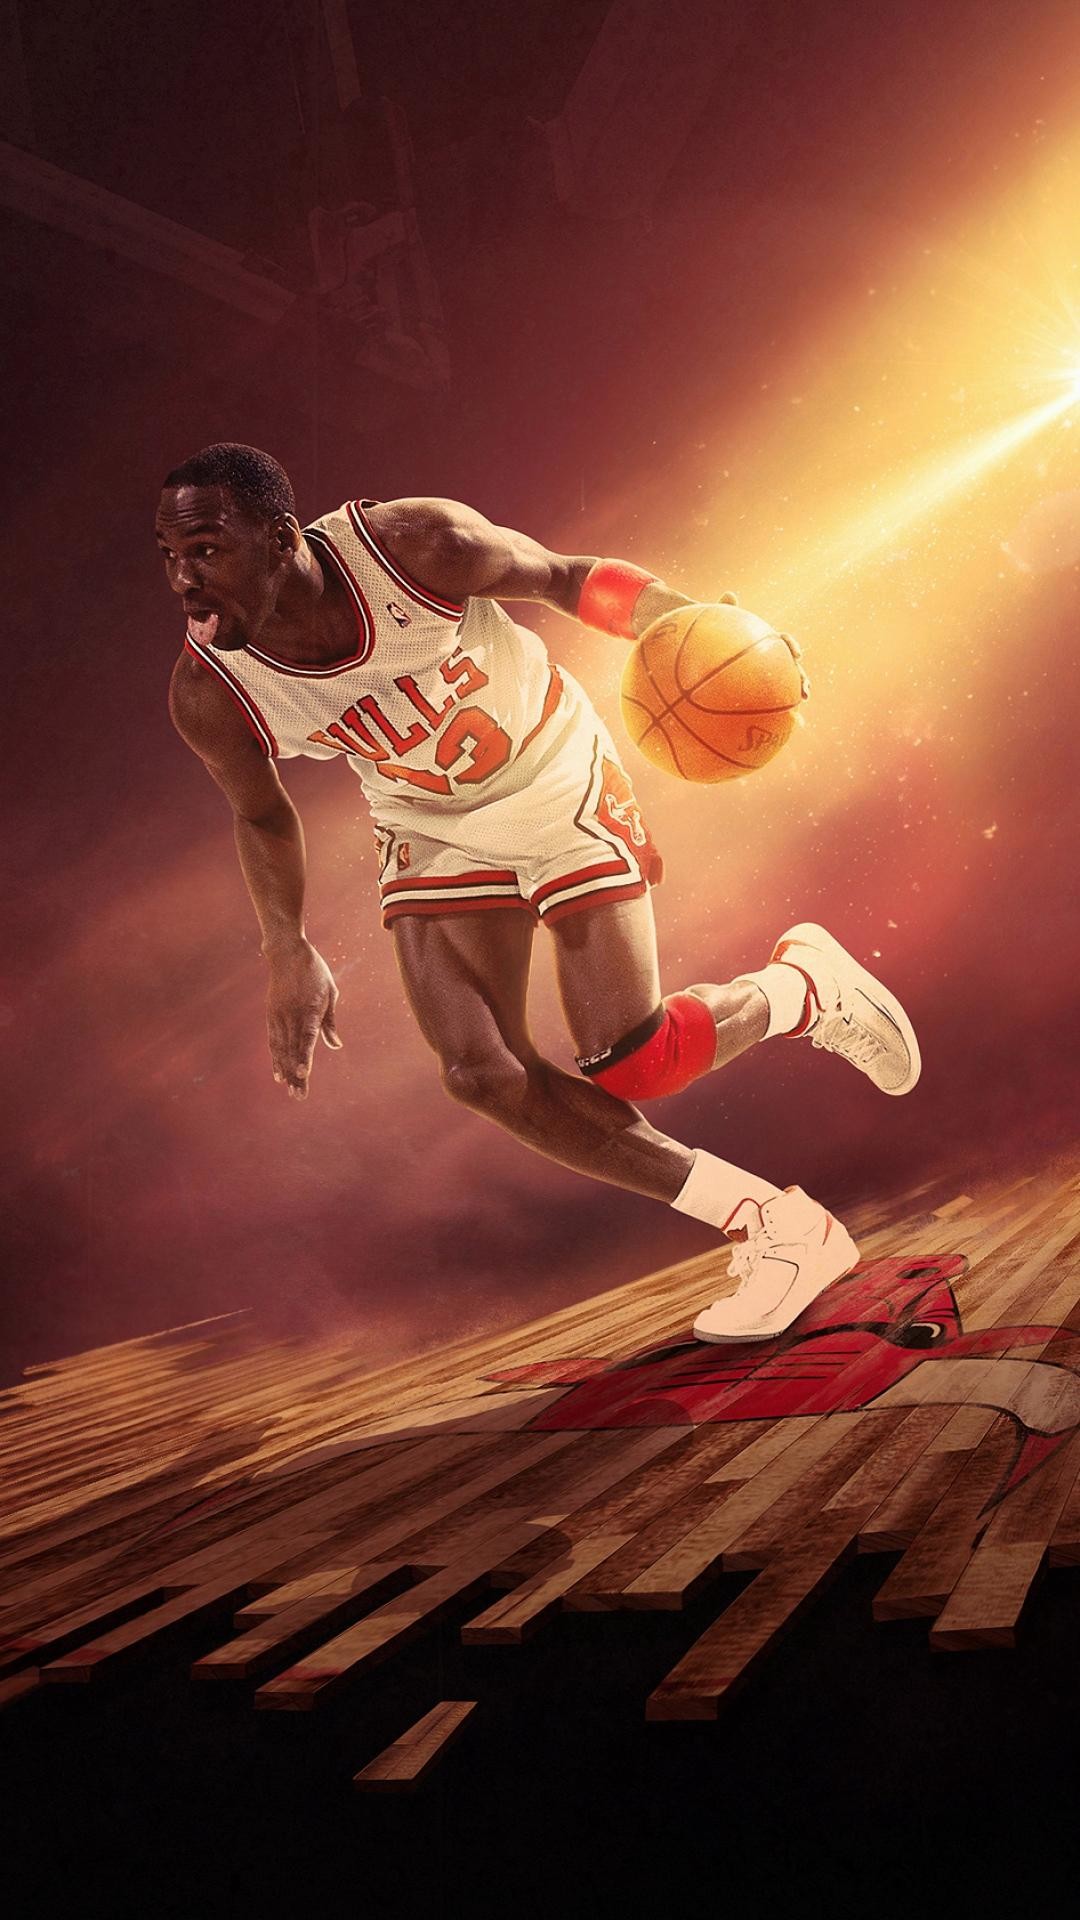 Wallpaper.wiki Michael Jordan Chicago Bulls Legend Basketball Sports NBA PIC WPC009931